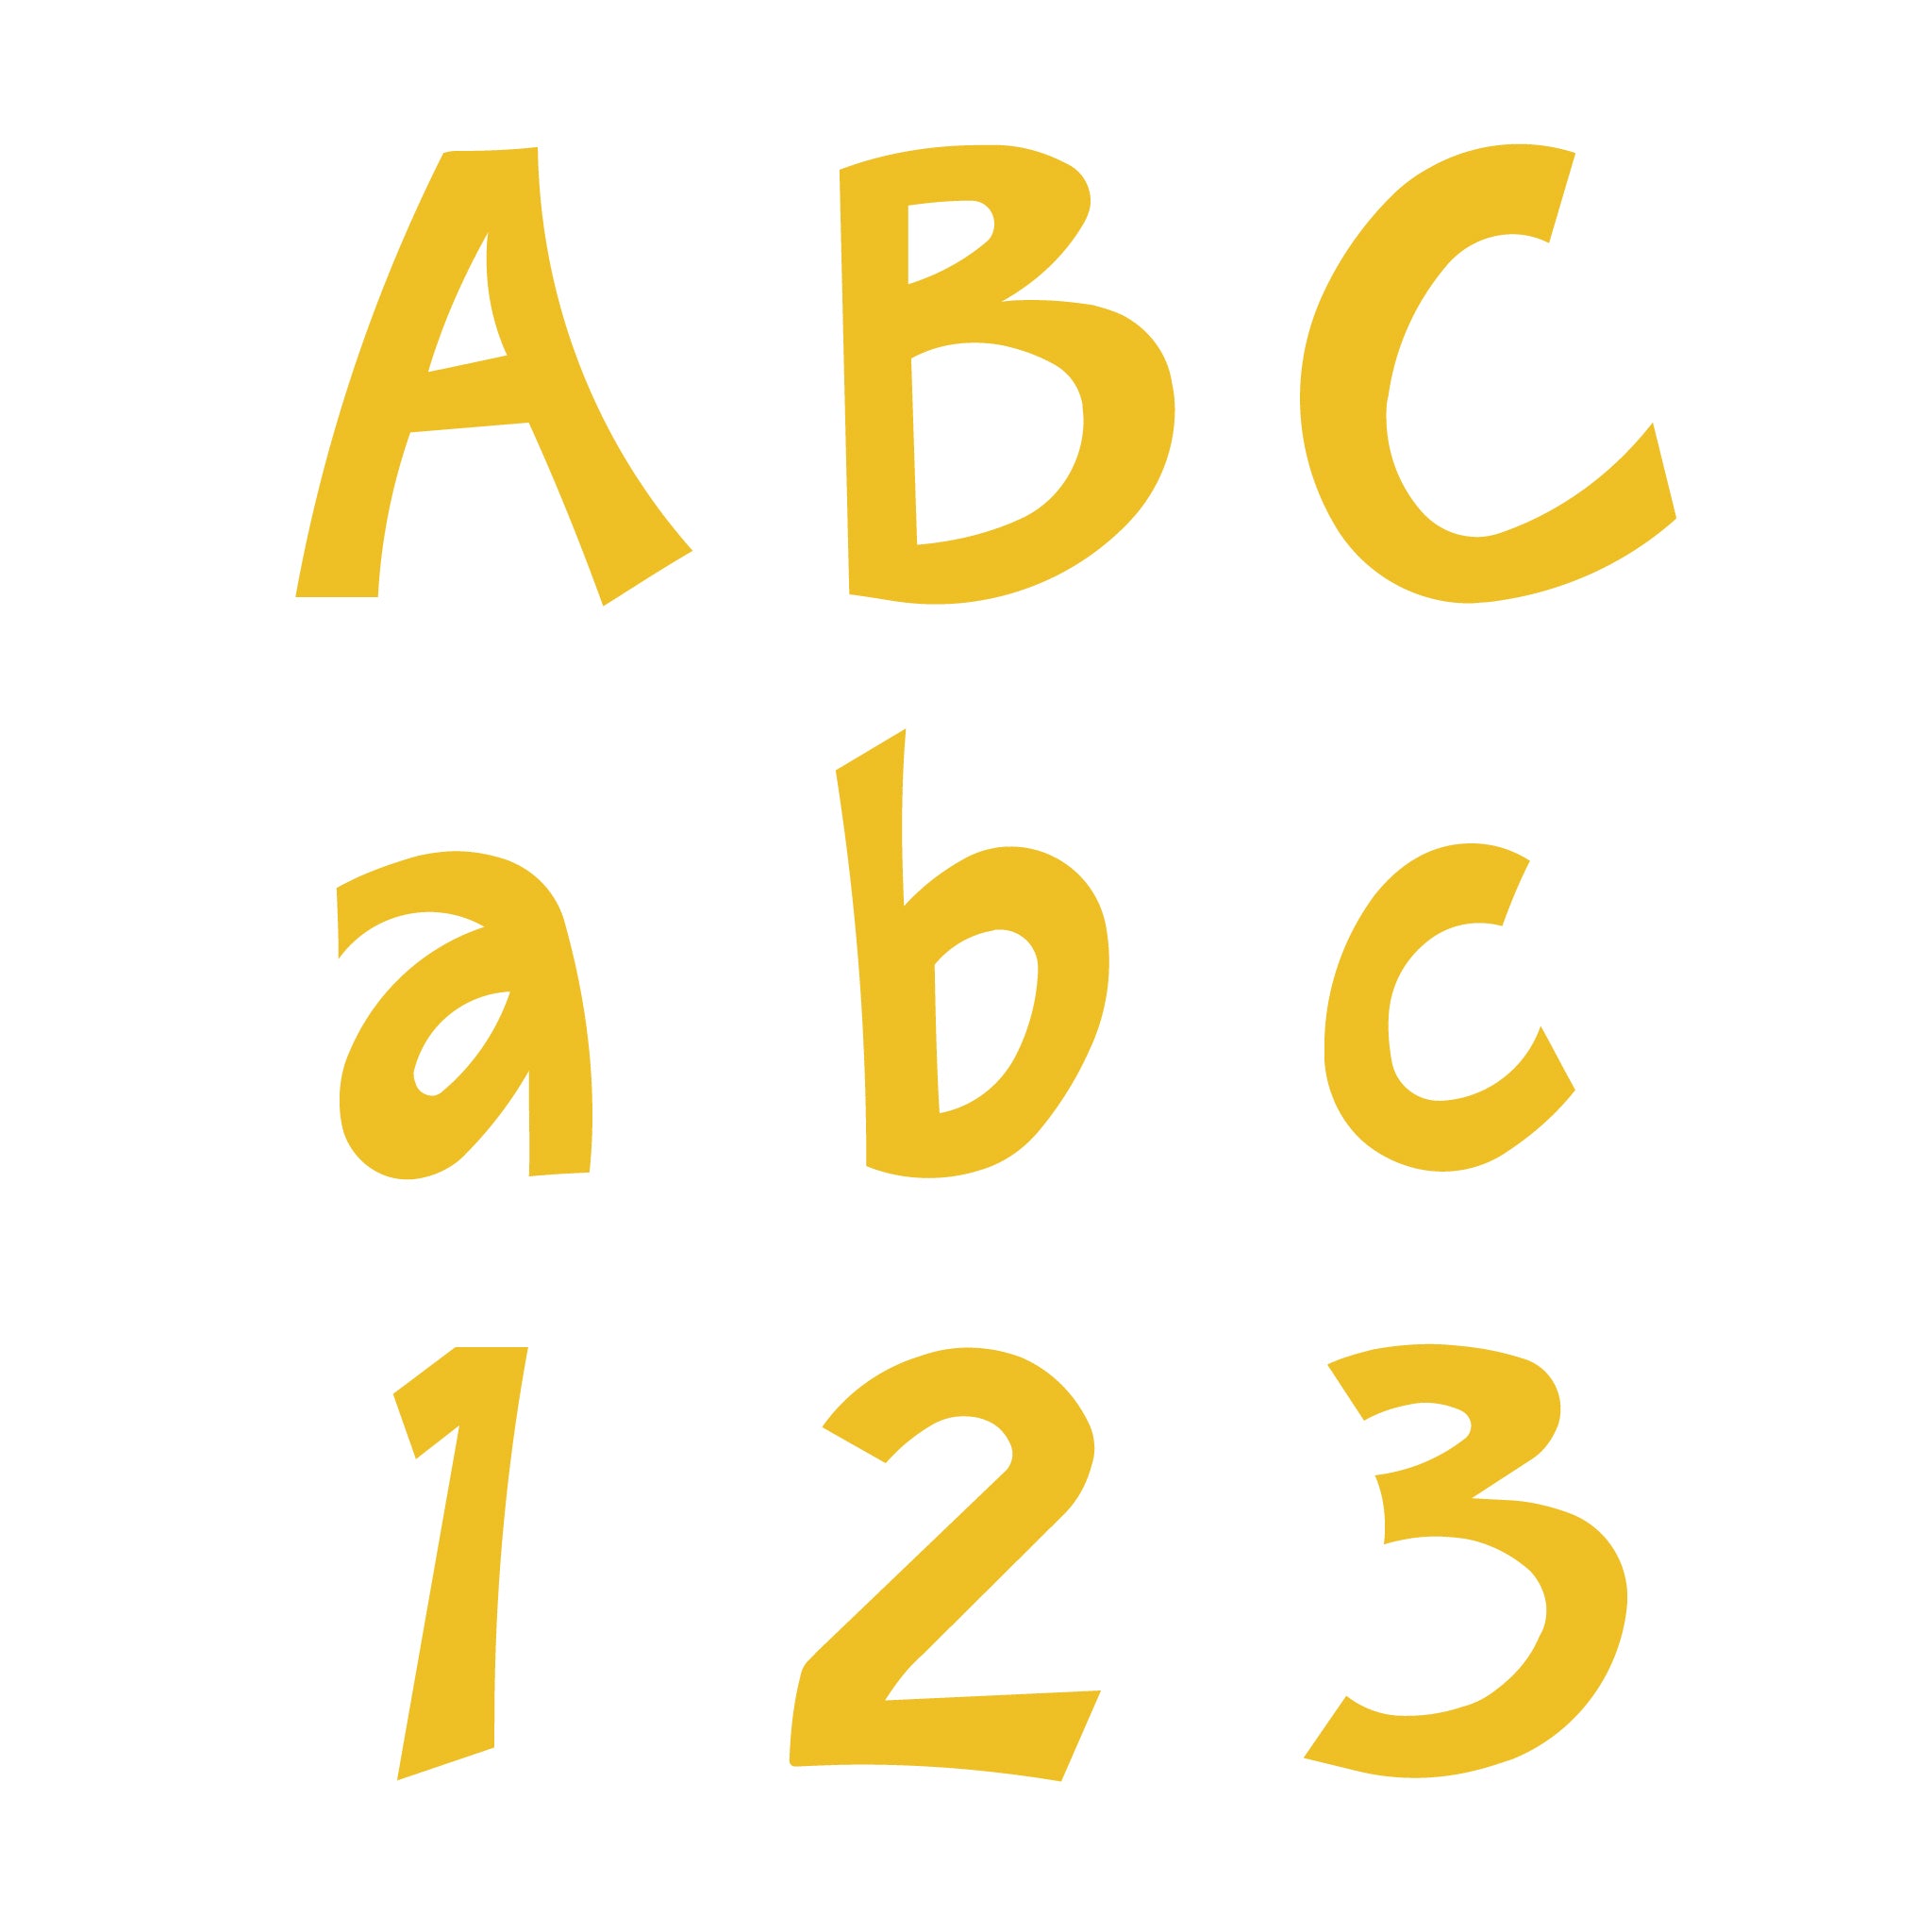 Aleks Melnyk #34 Metal Journal Stencils/Alphabet Letter Number,  ABC/Stainless Steel Stencils Kit 3 PCS/Templates Tool for